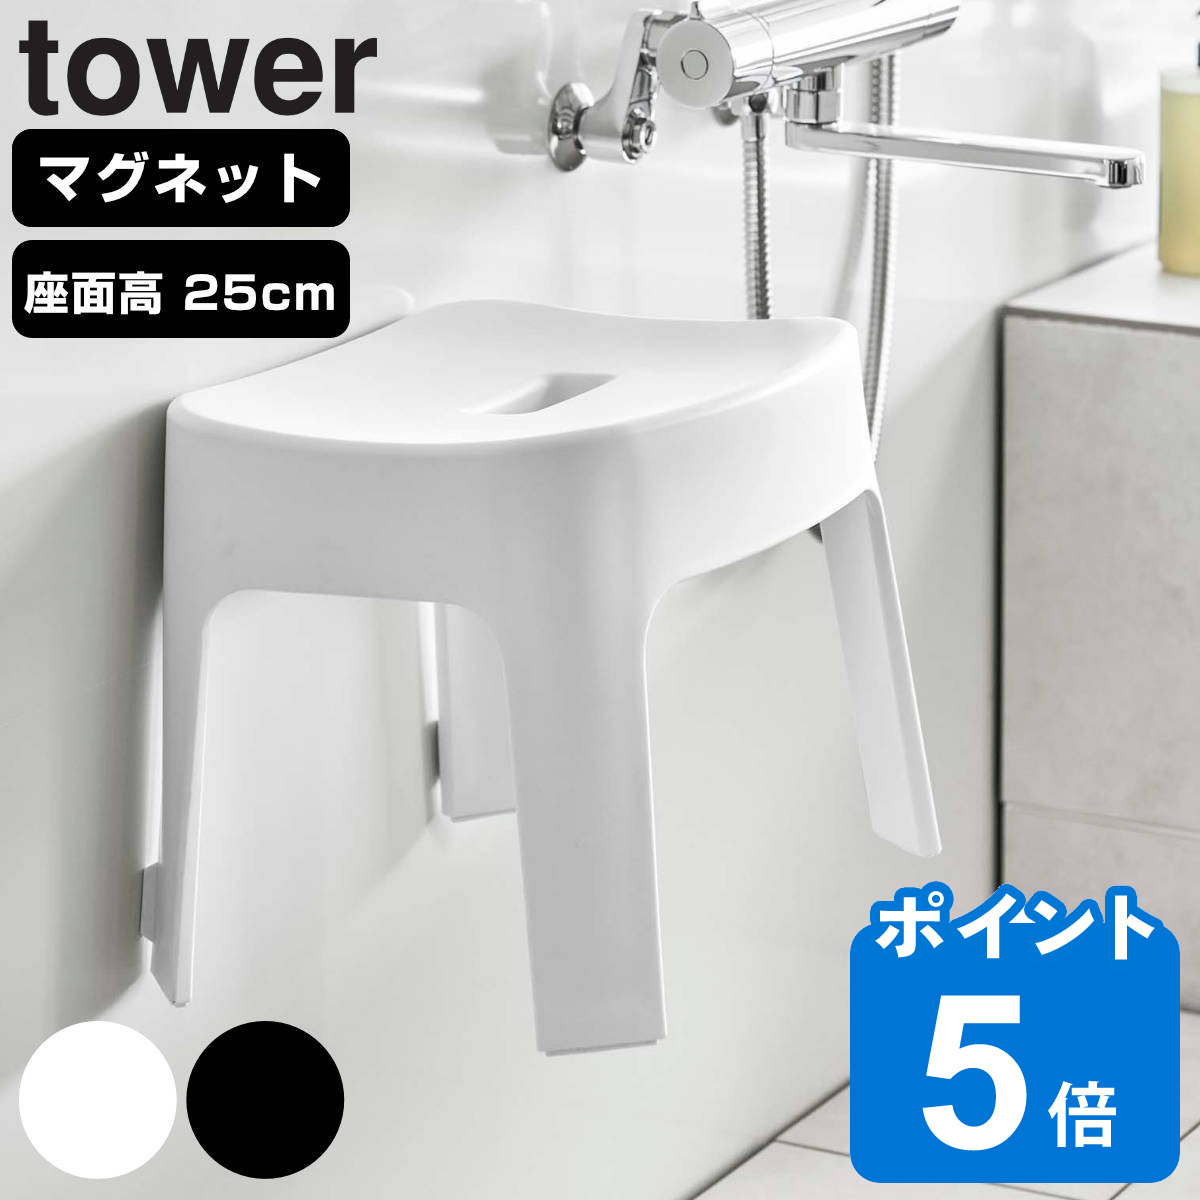 tower マグネット風呂イス タワー SH25